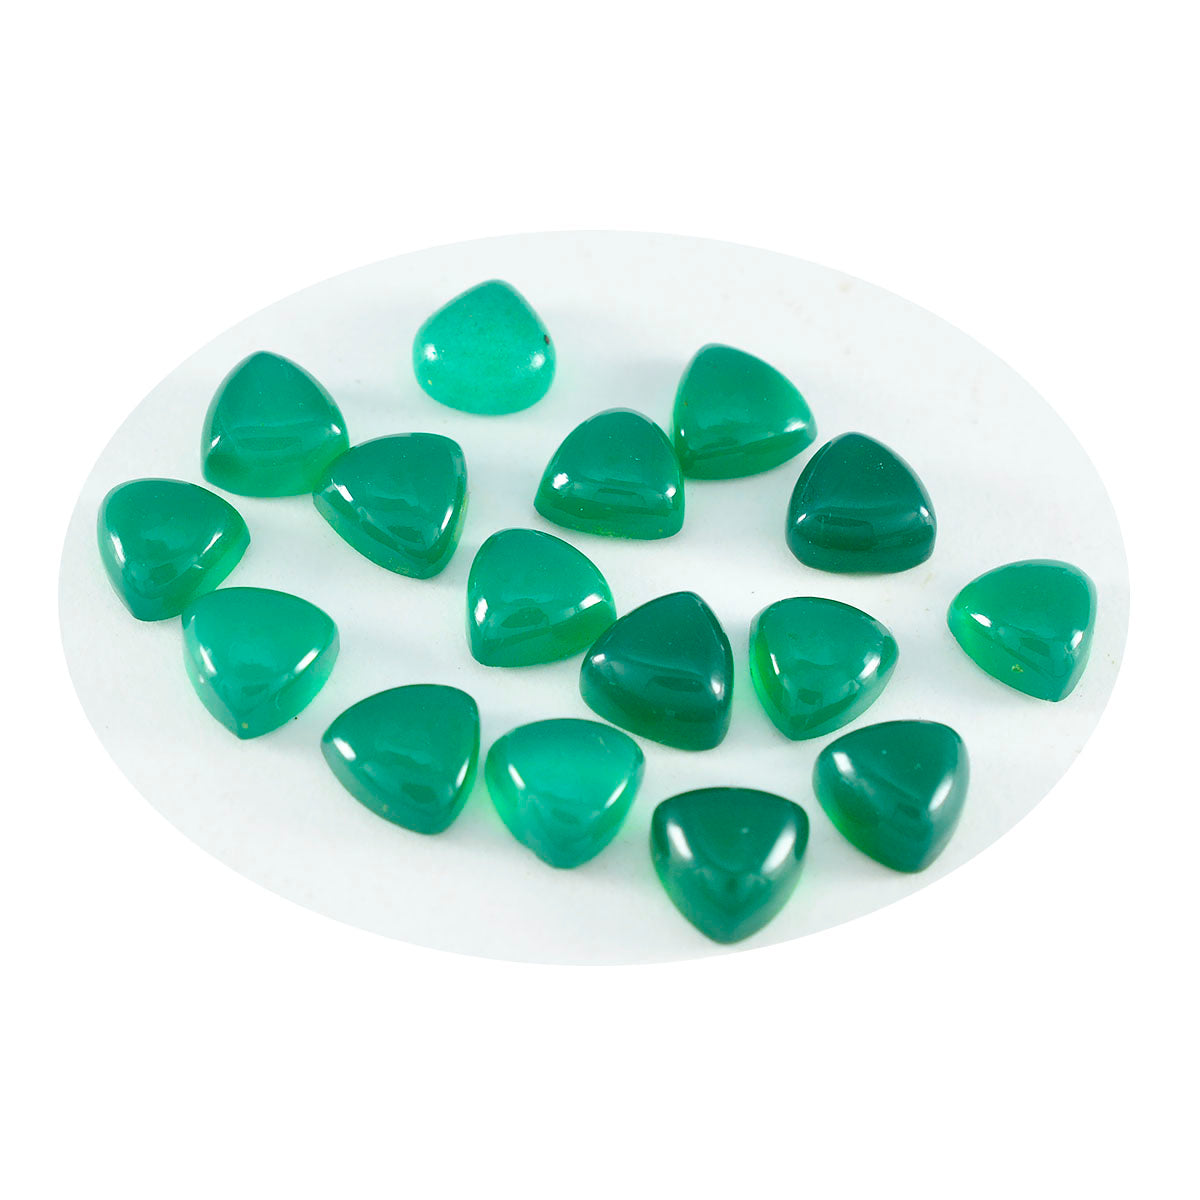 Riyogems 1PC groene onyx cabochon 7X7 mm biljoen vorm geweldige kwaliteit steen